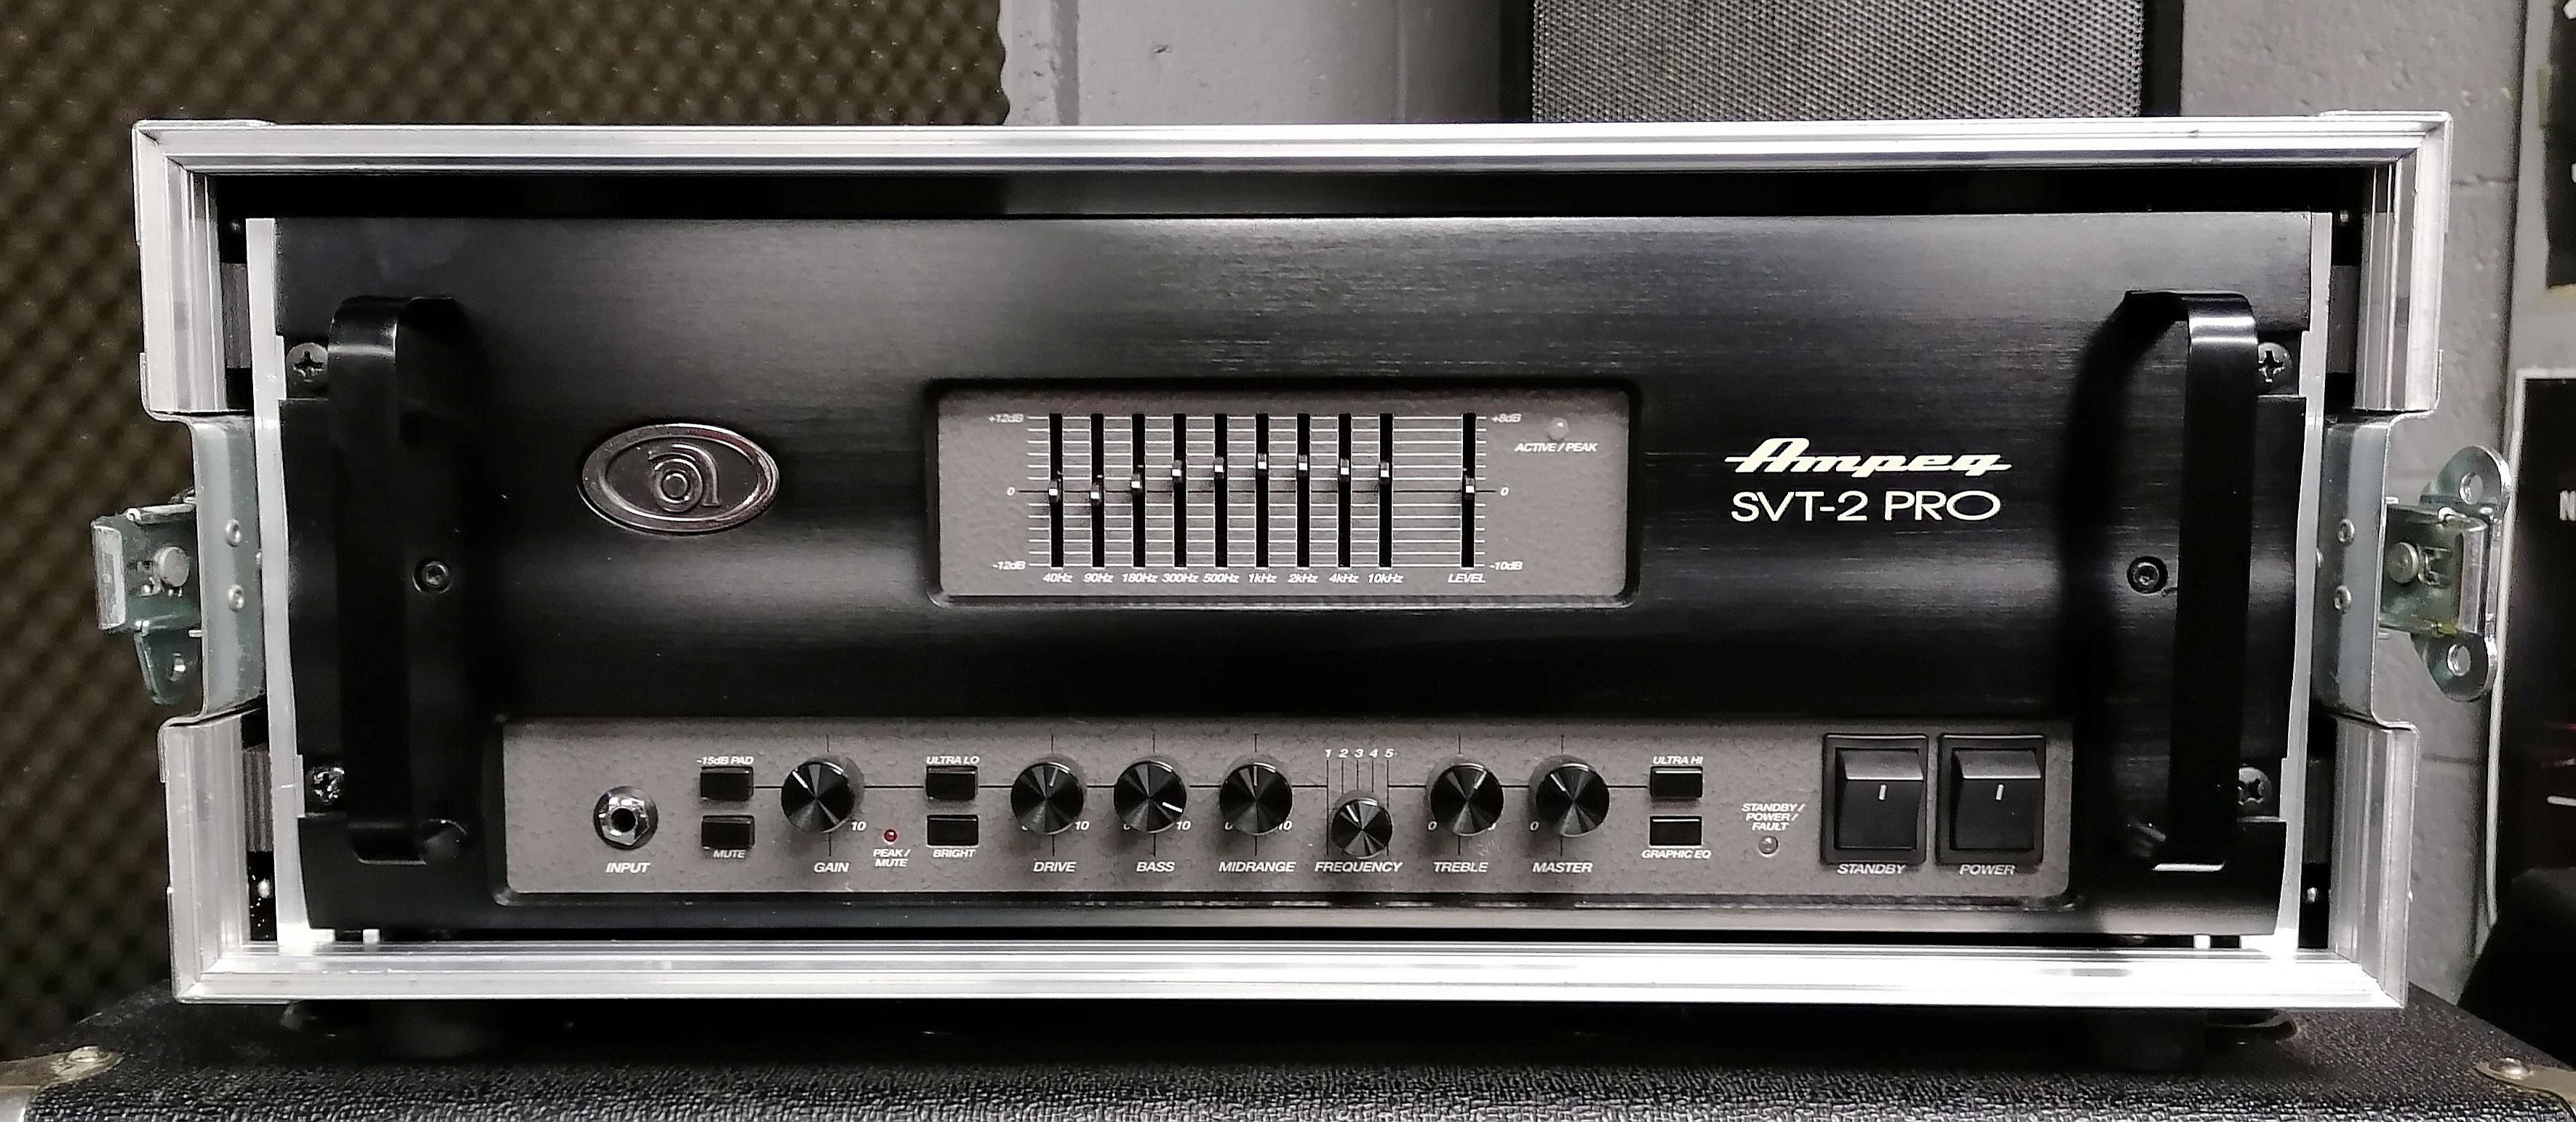 SVT-2 Pro - Ampeg SVT-2 Pro - Audiofanzine